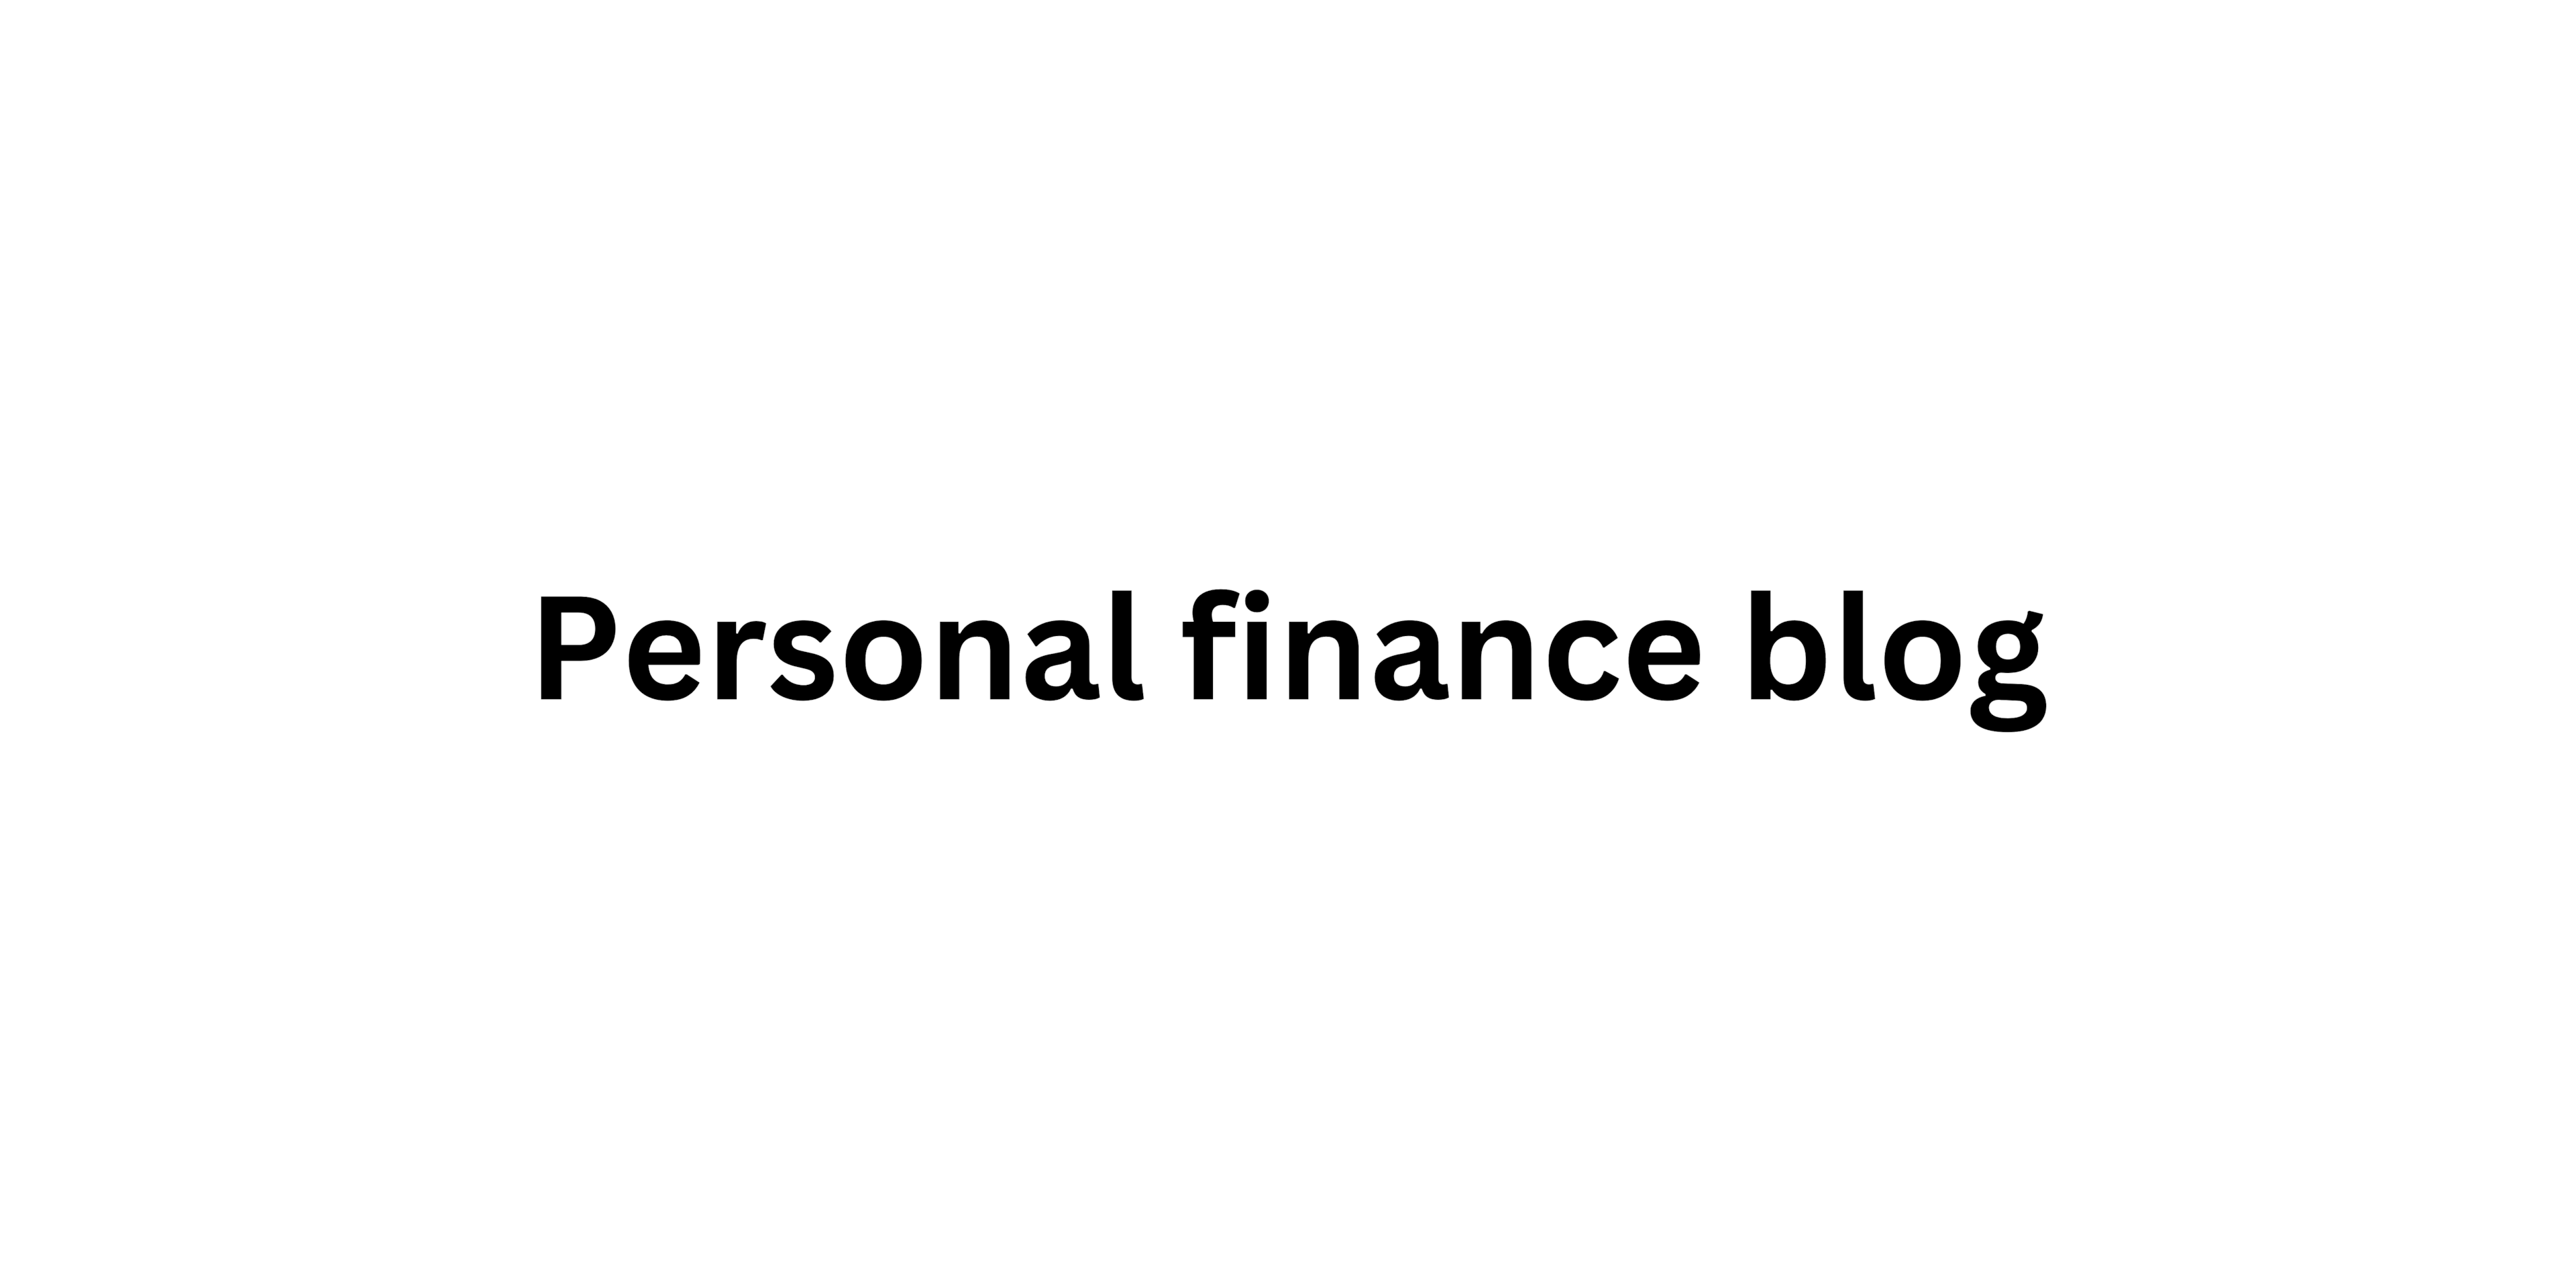 Personal finance blog